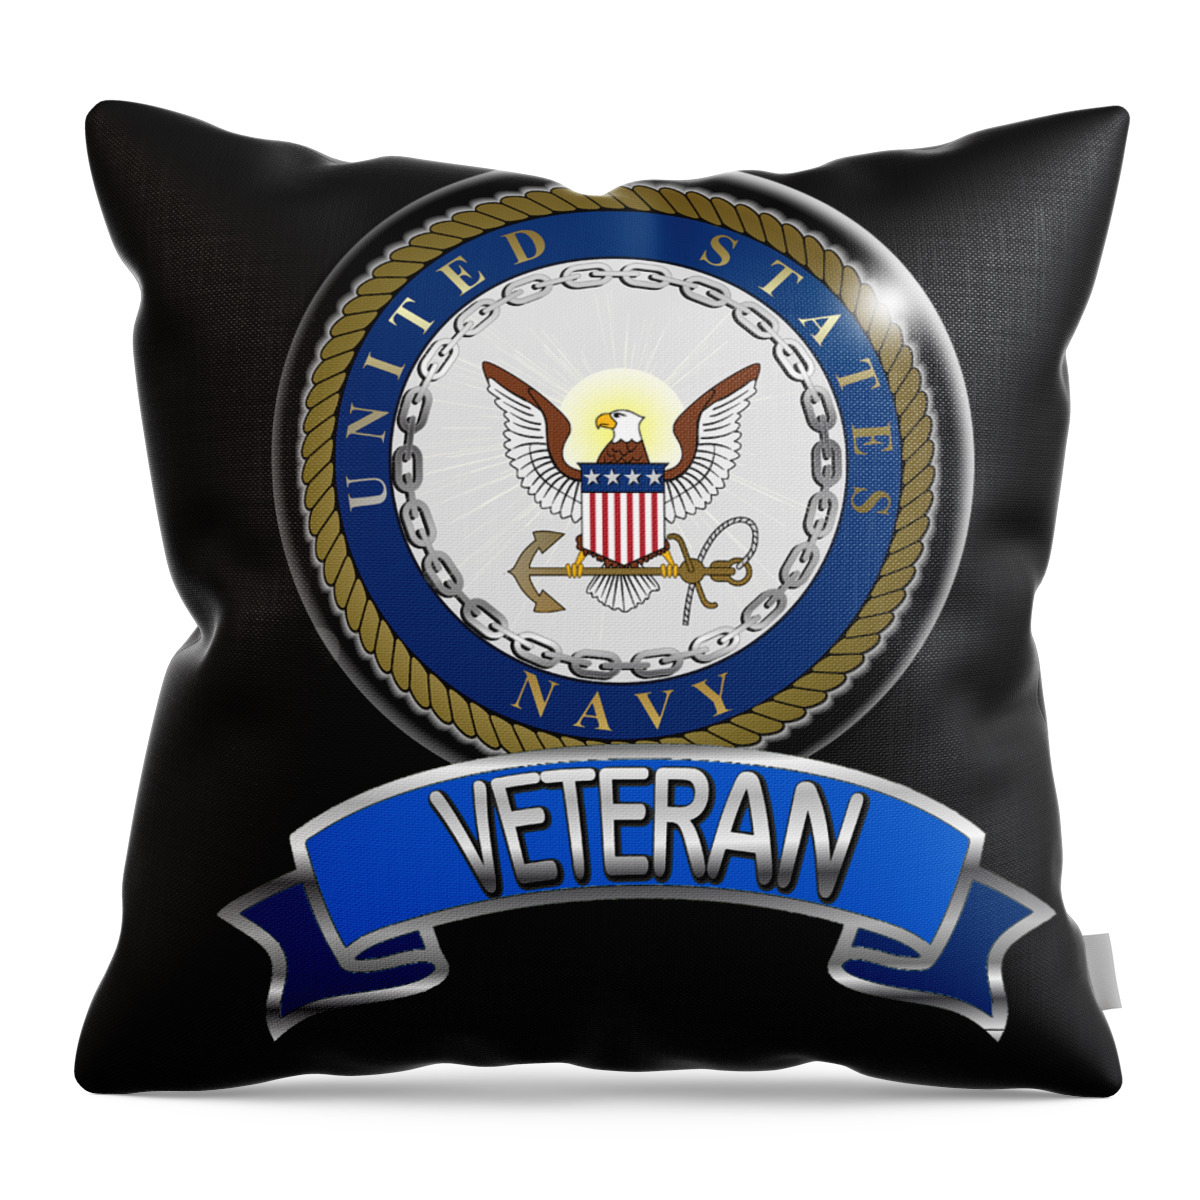 Navy Throw Pillow featuring the digital art Navy Vet by Bill Richards